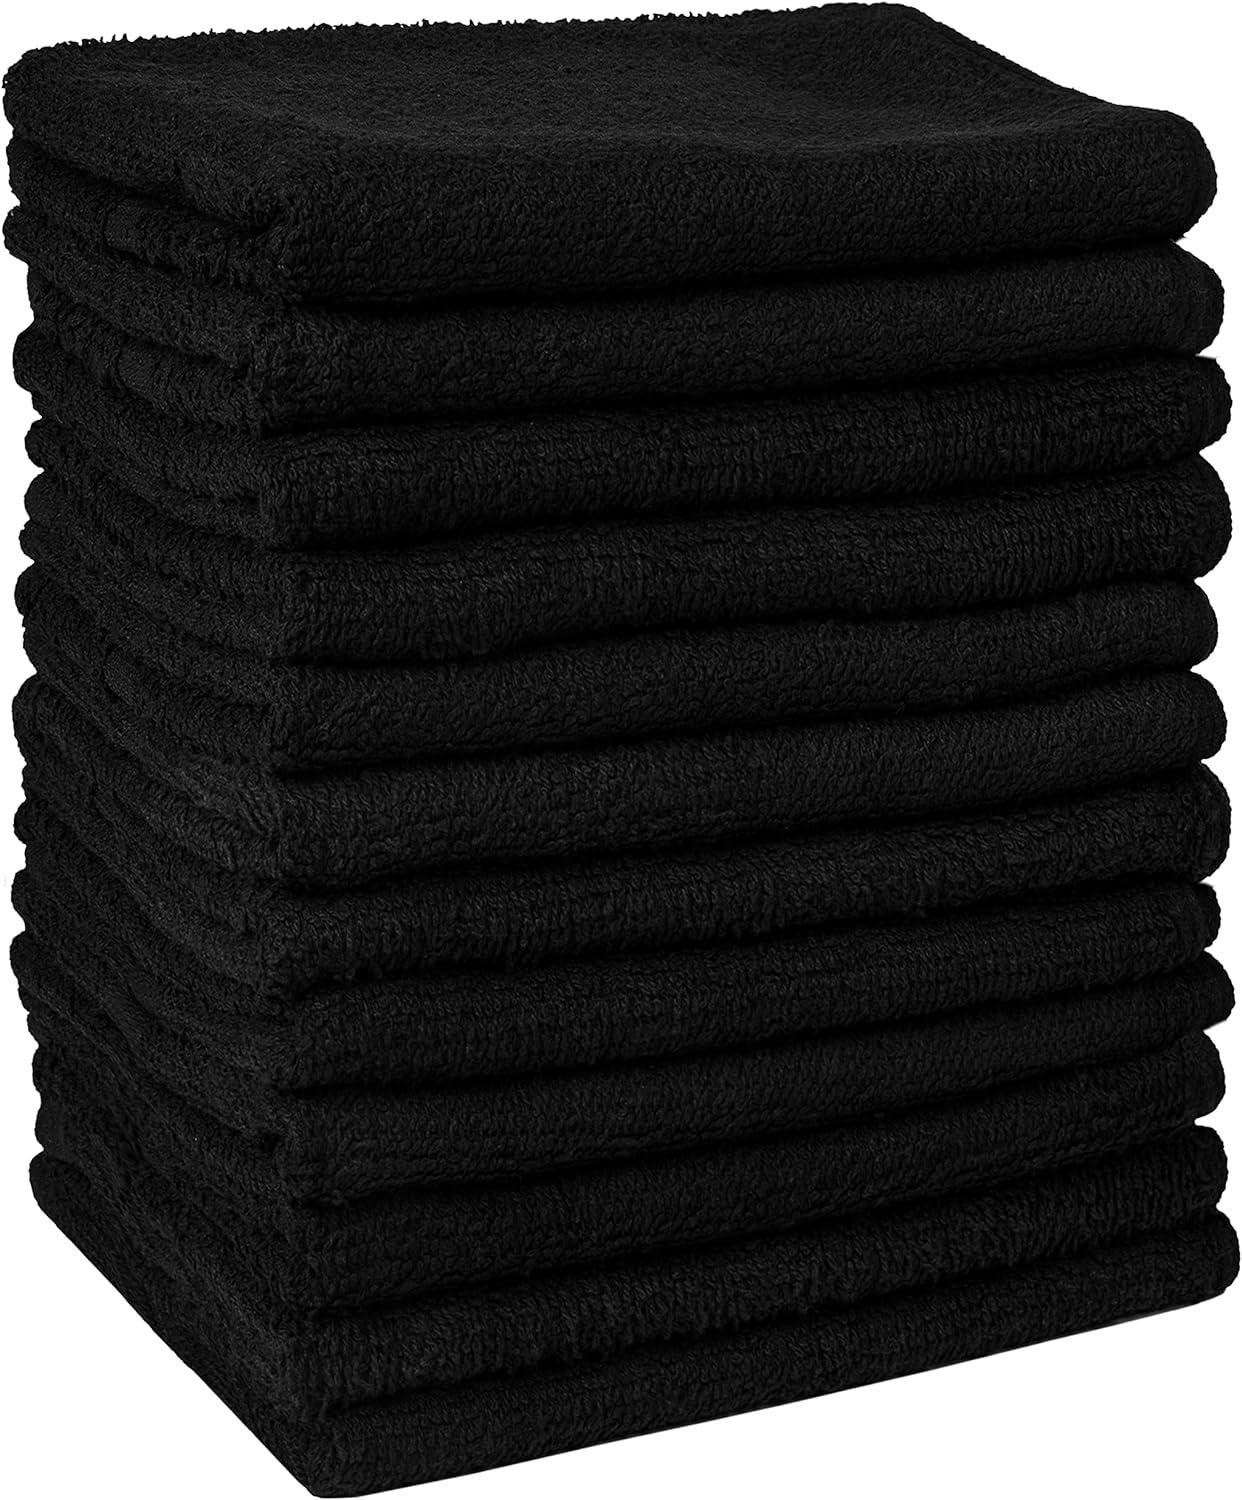 Black Hand Towels  16x27 Spa Hand Towels